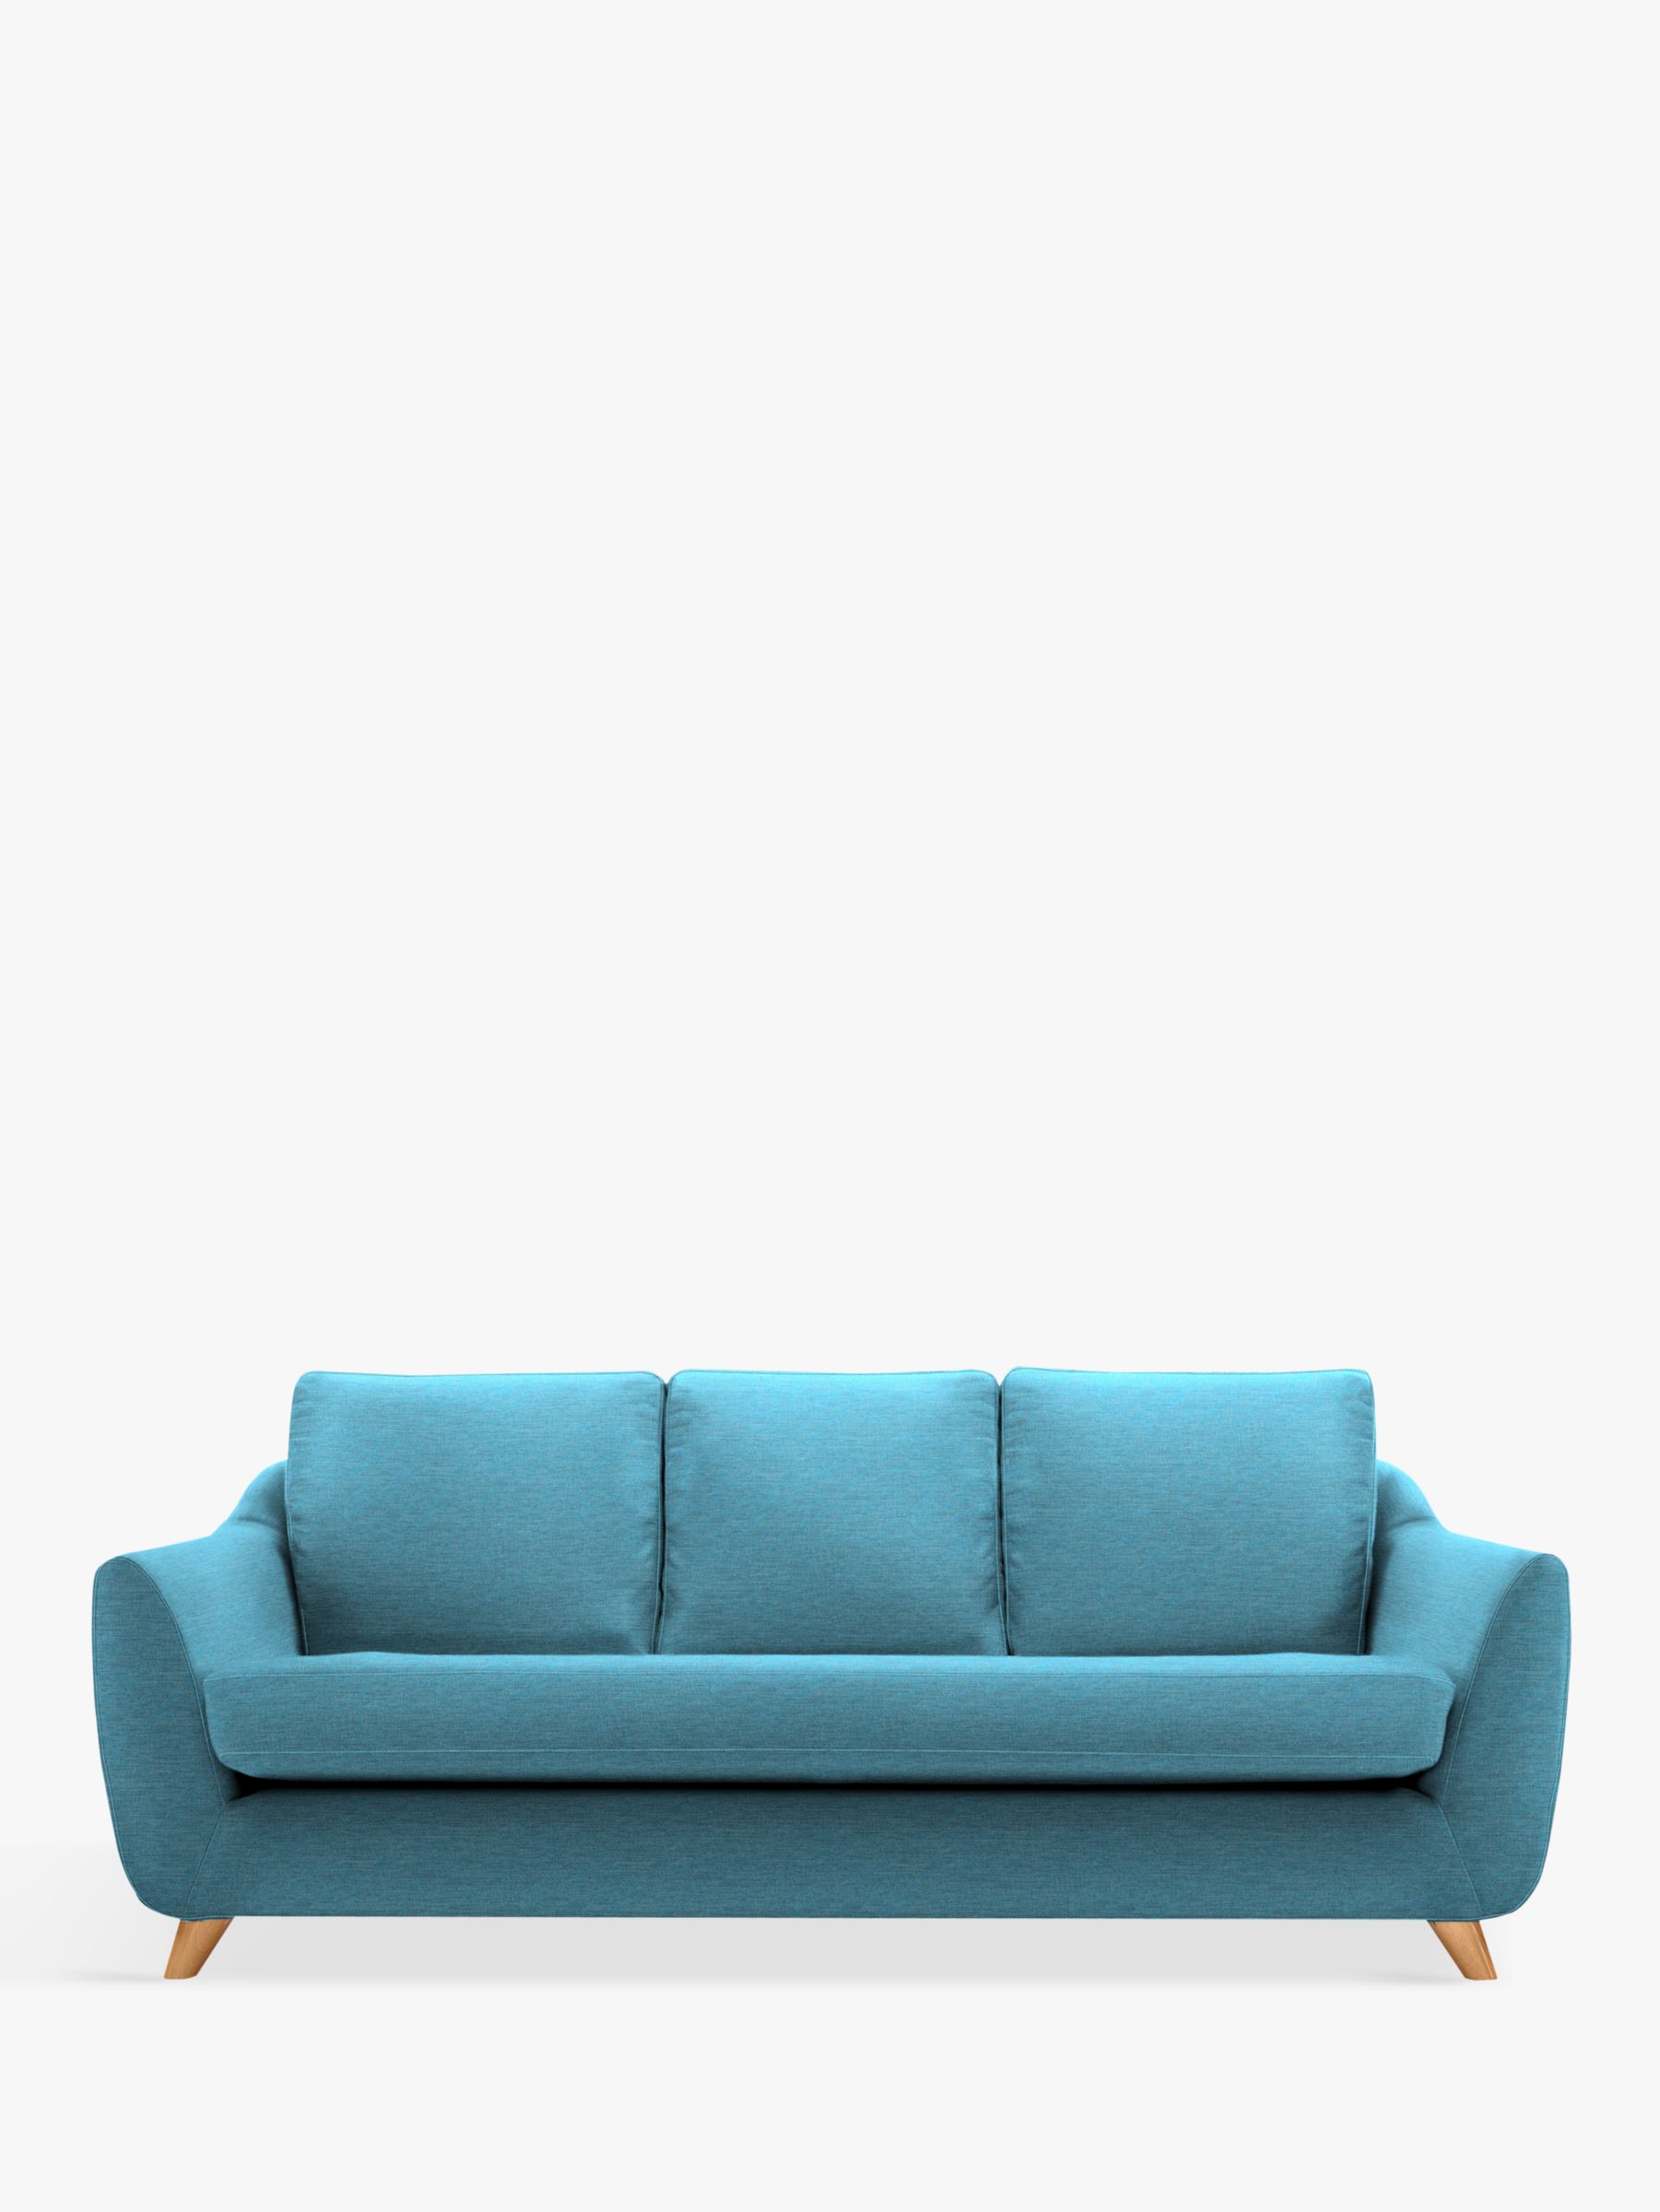 G Plan Vintage The Sixty Seven Large Sofa, Fleck Blue, width 208cm